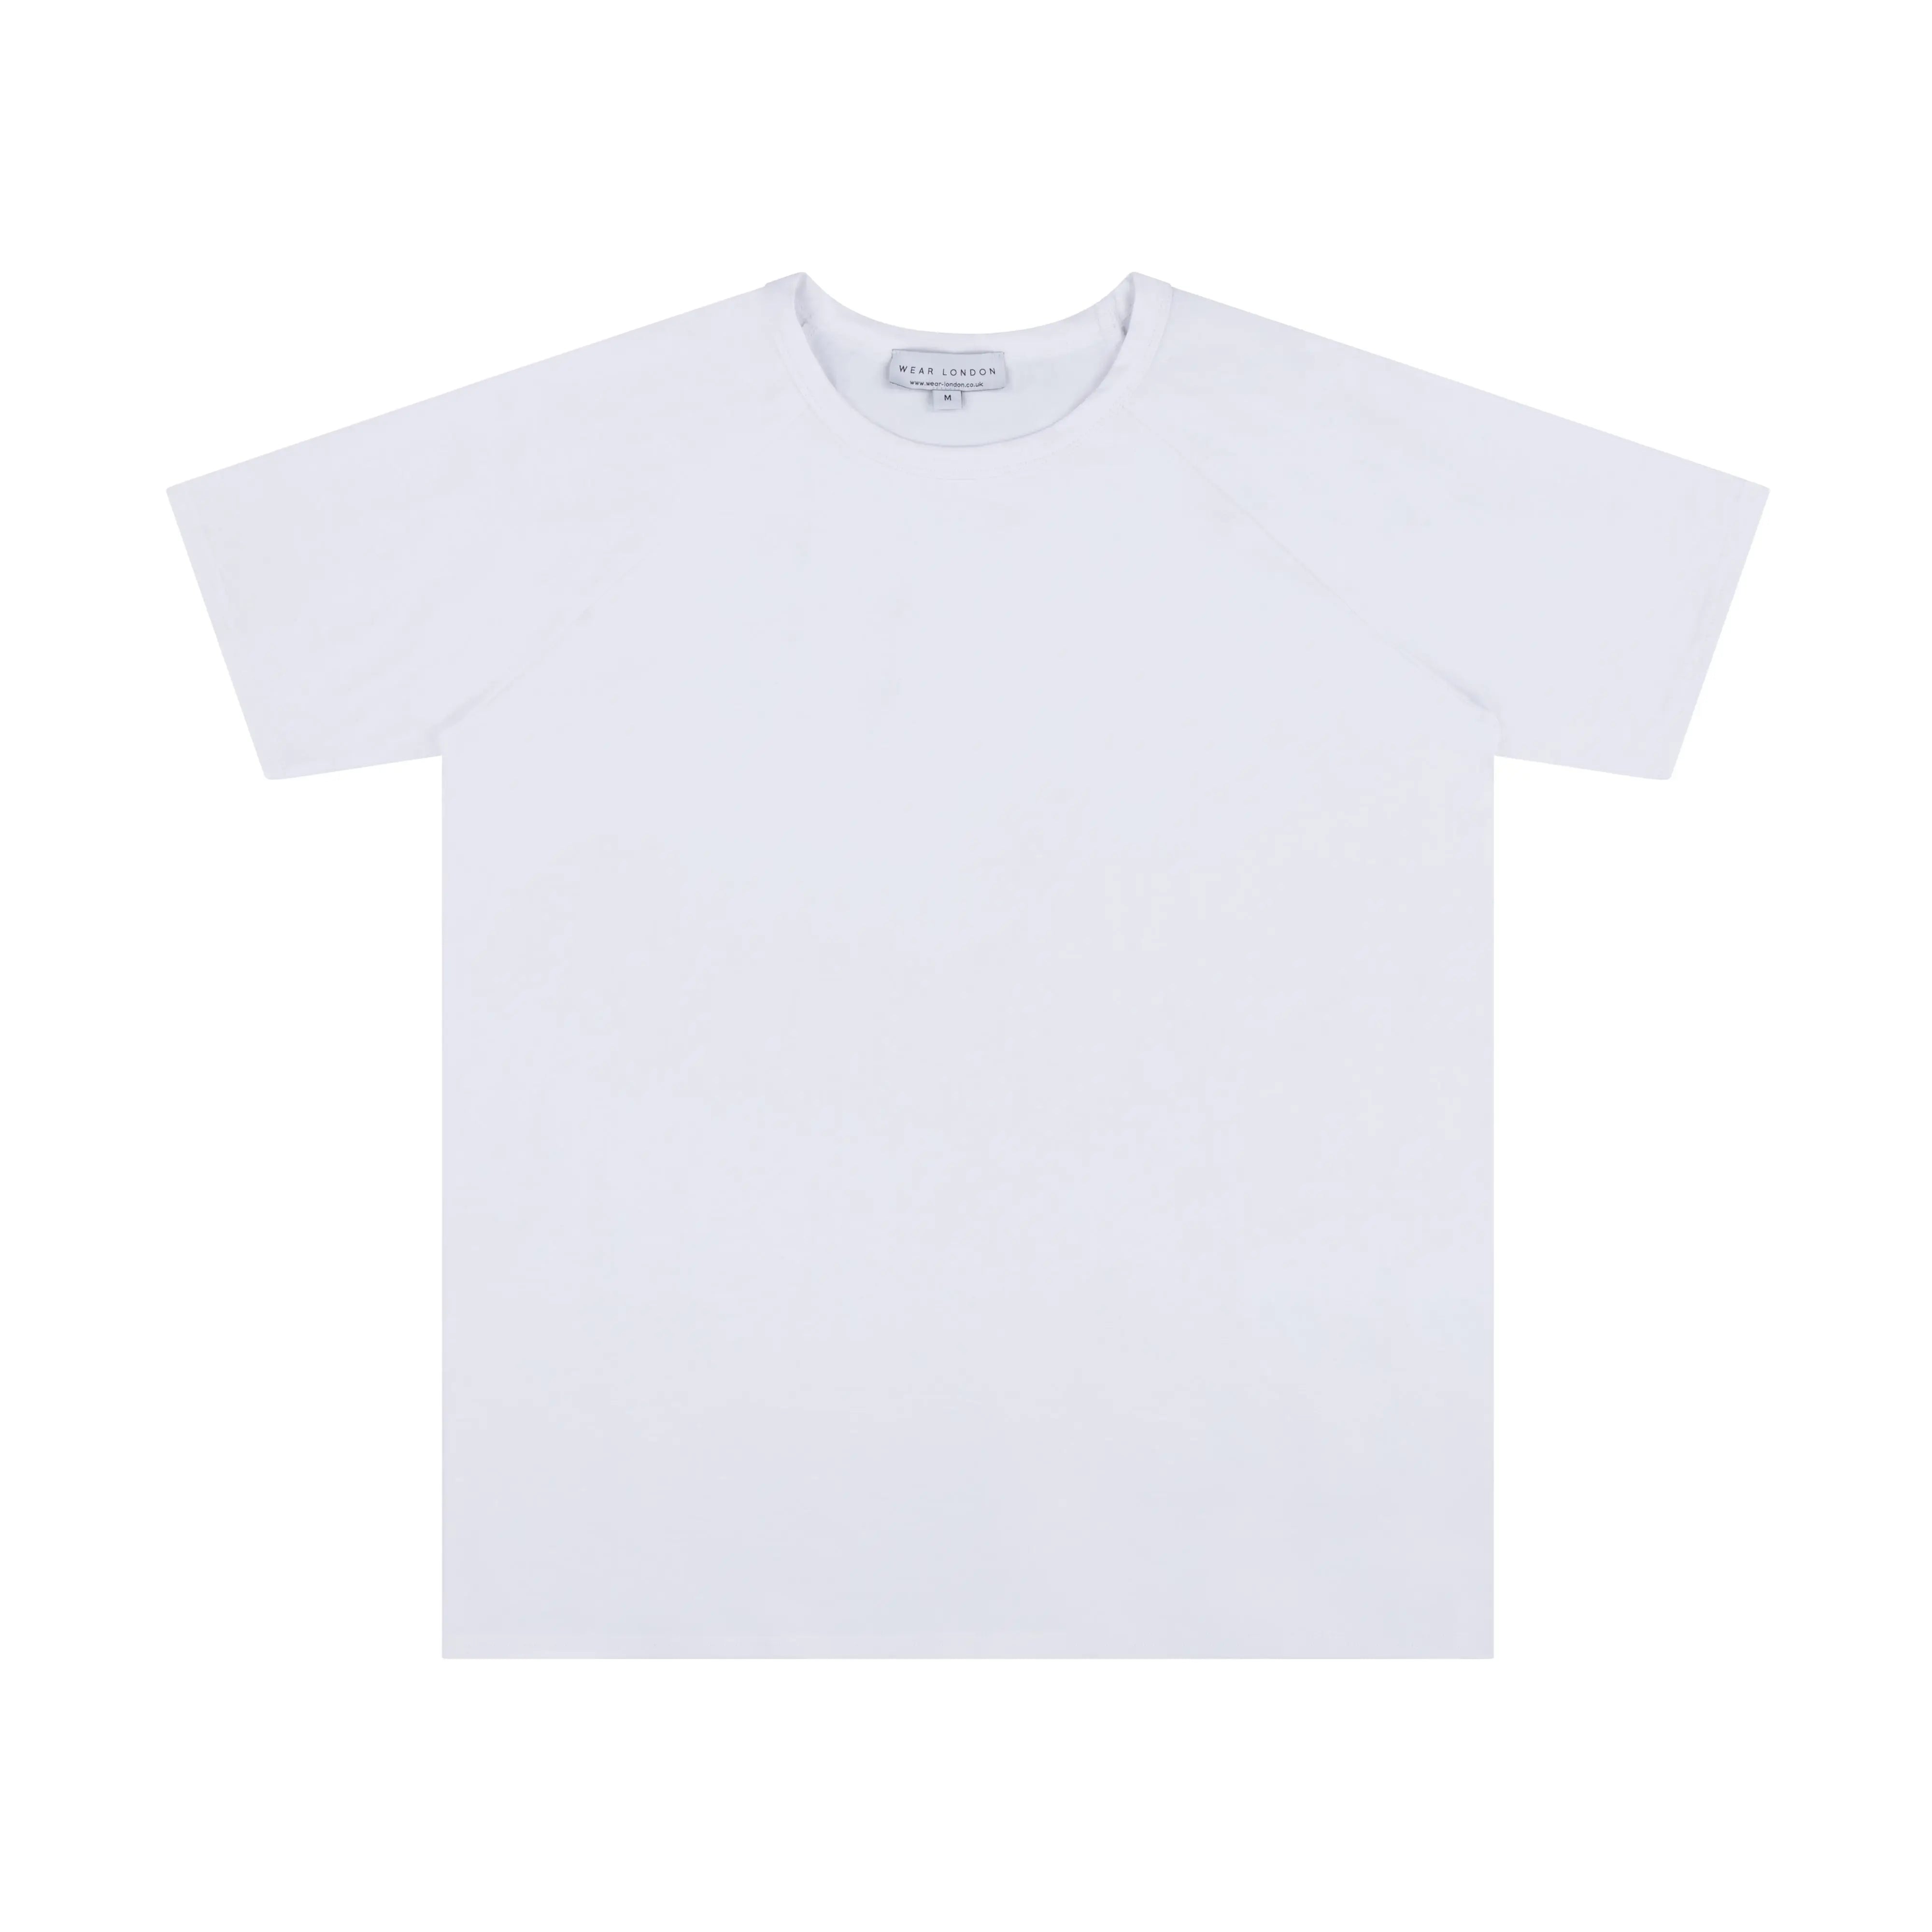 Hoxton Short sleeve t-shirt - White Wear London